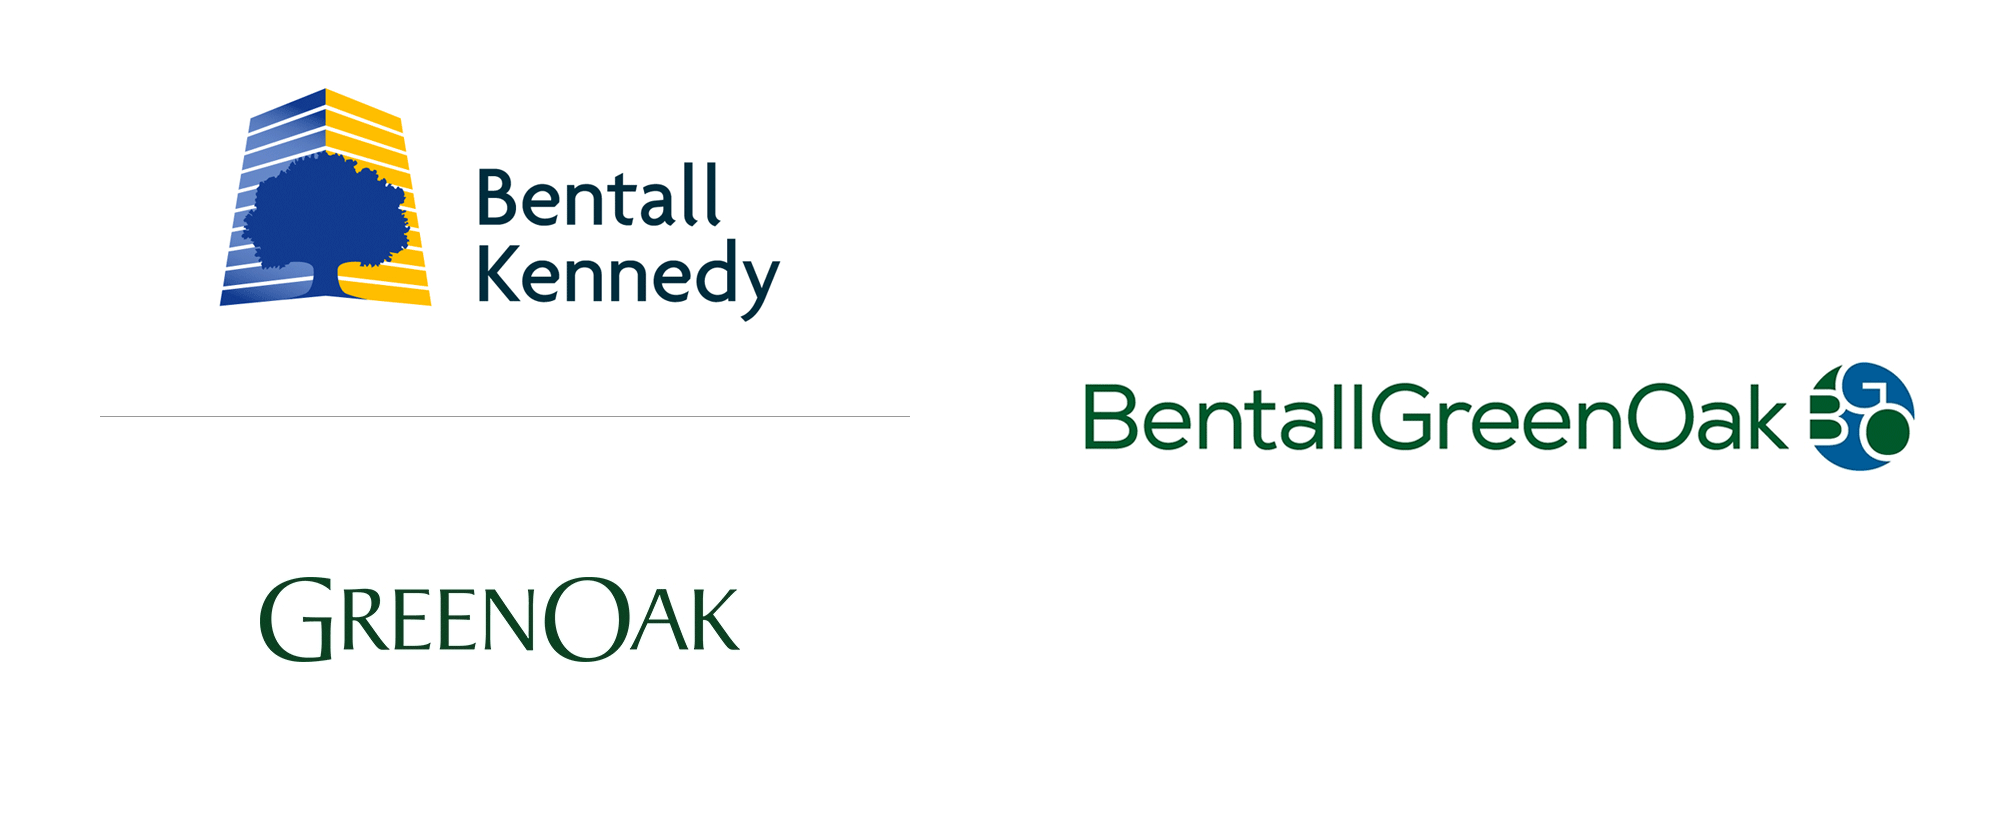 New Name and Logo for BentallGreenOak